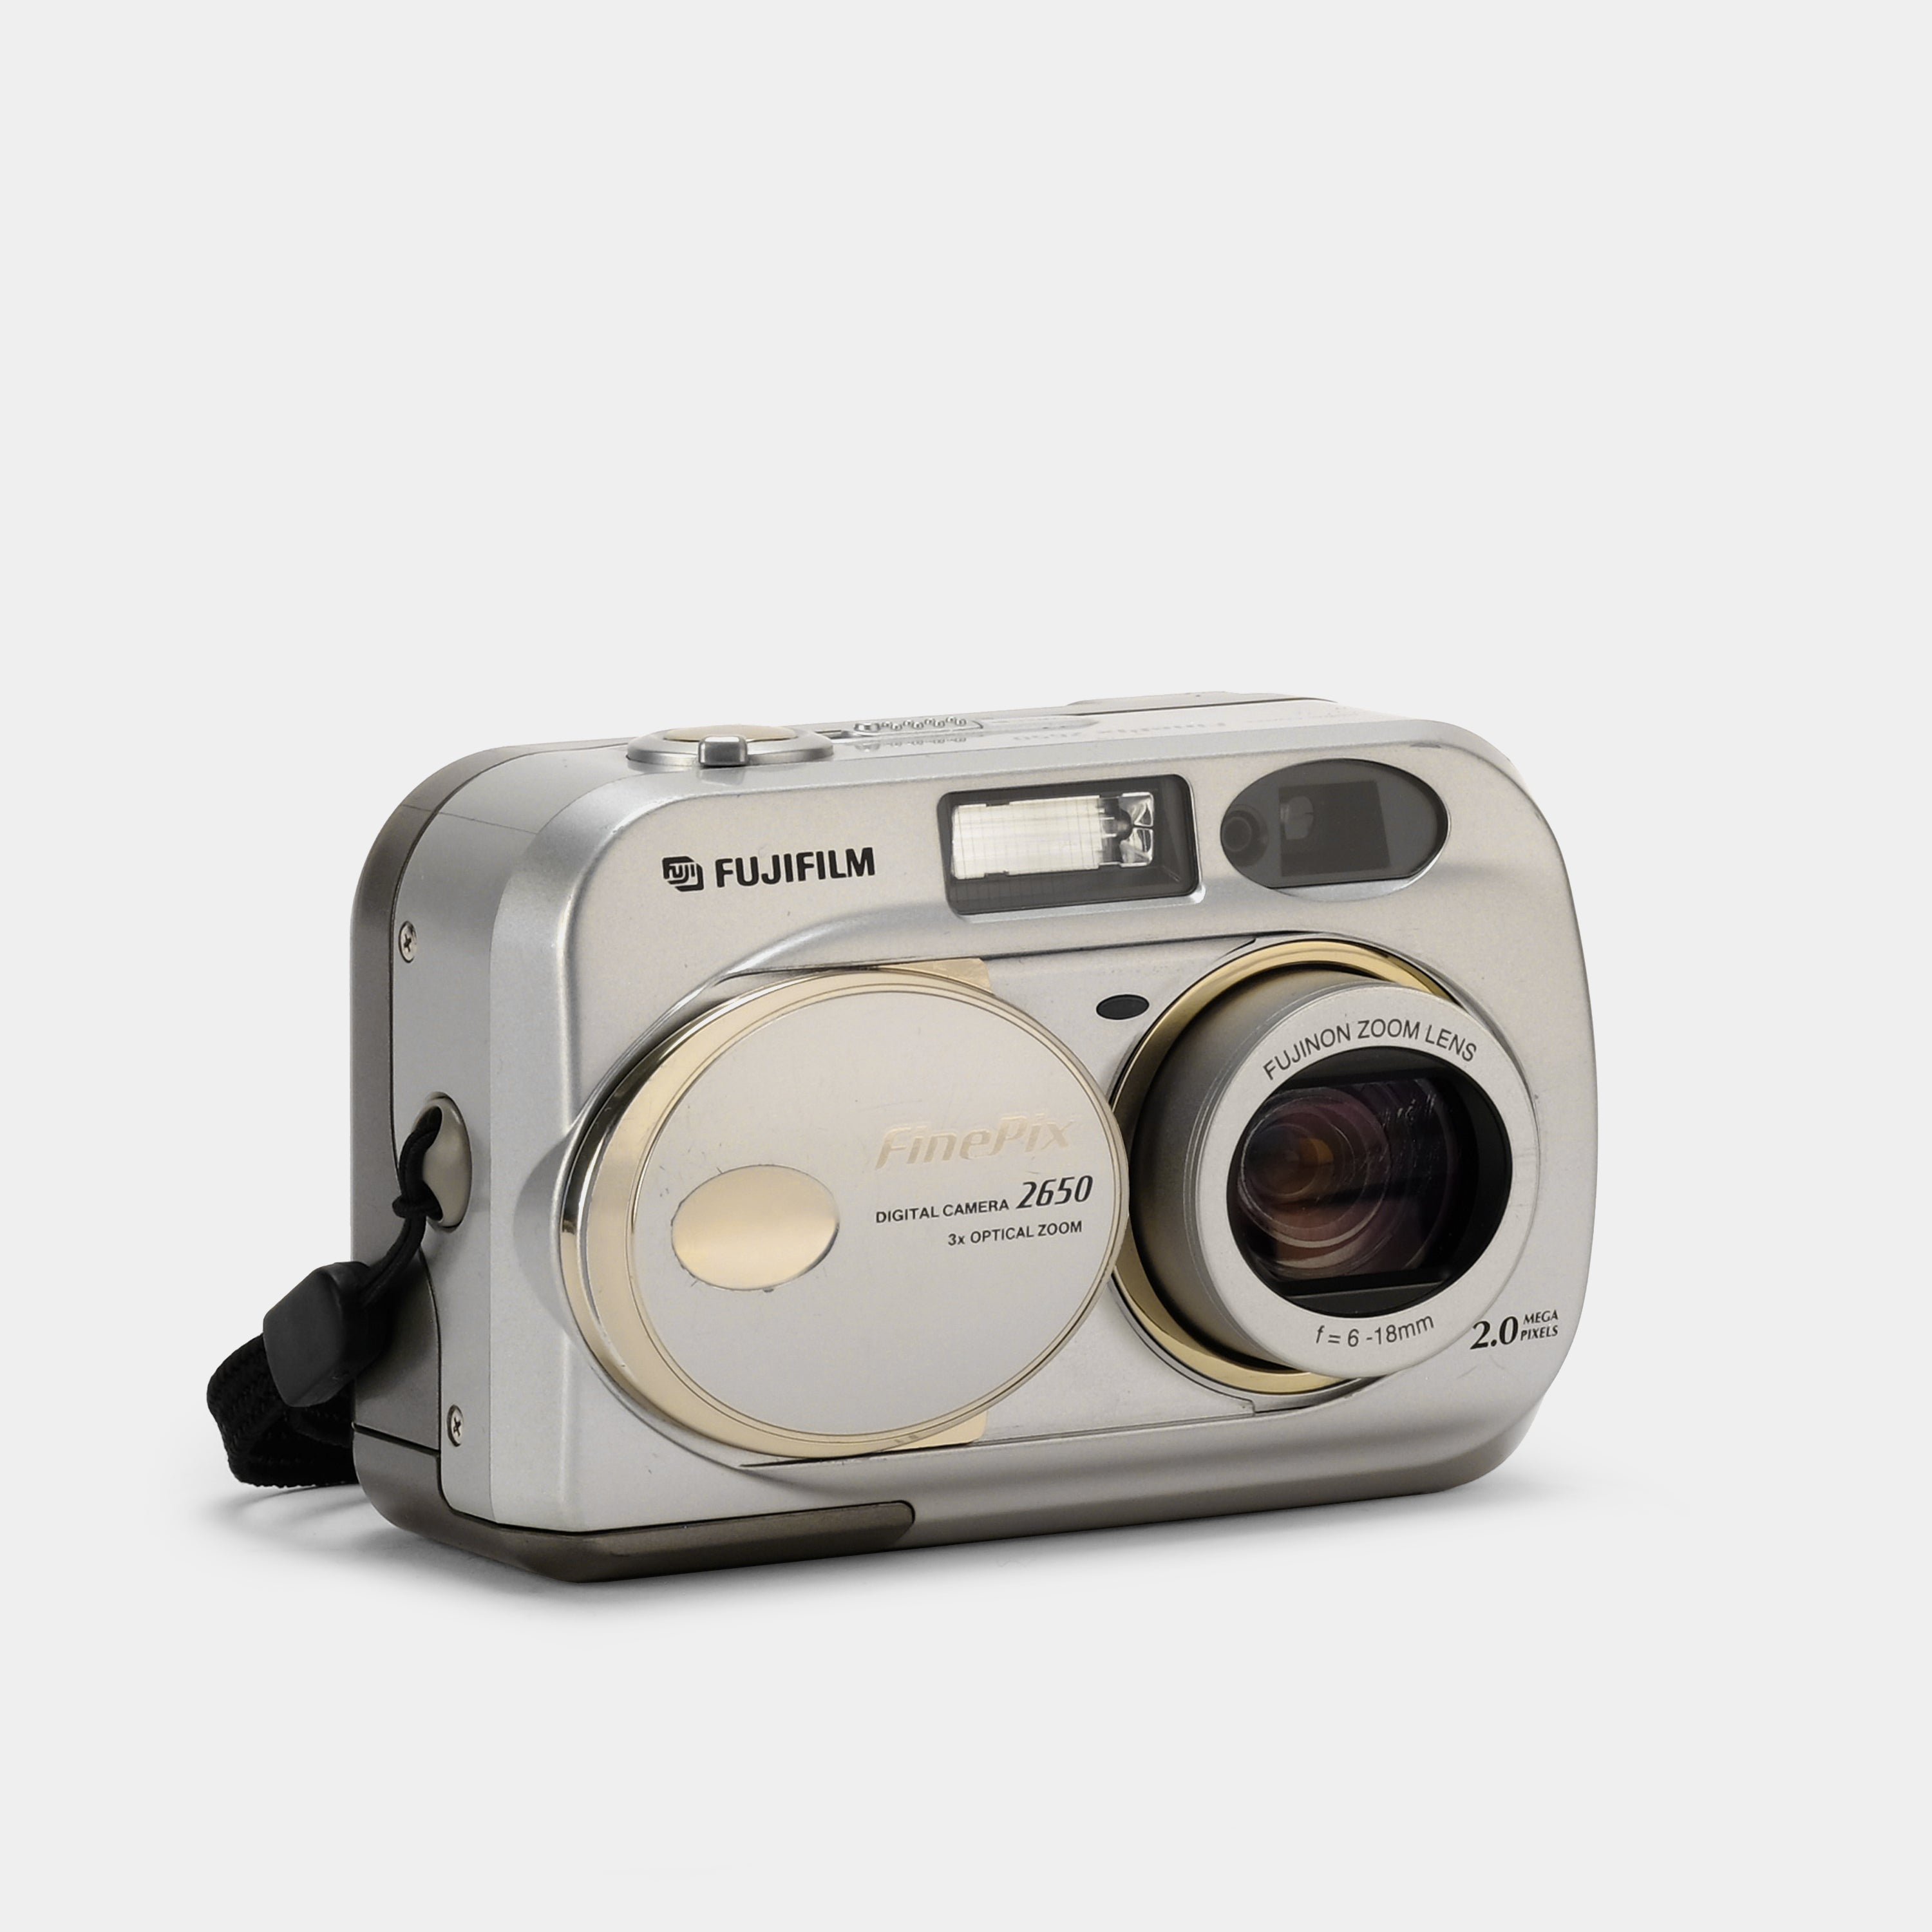 Fujifilm FinePix 2650 Point and Shoot Digital Camera